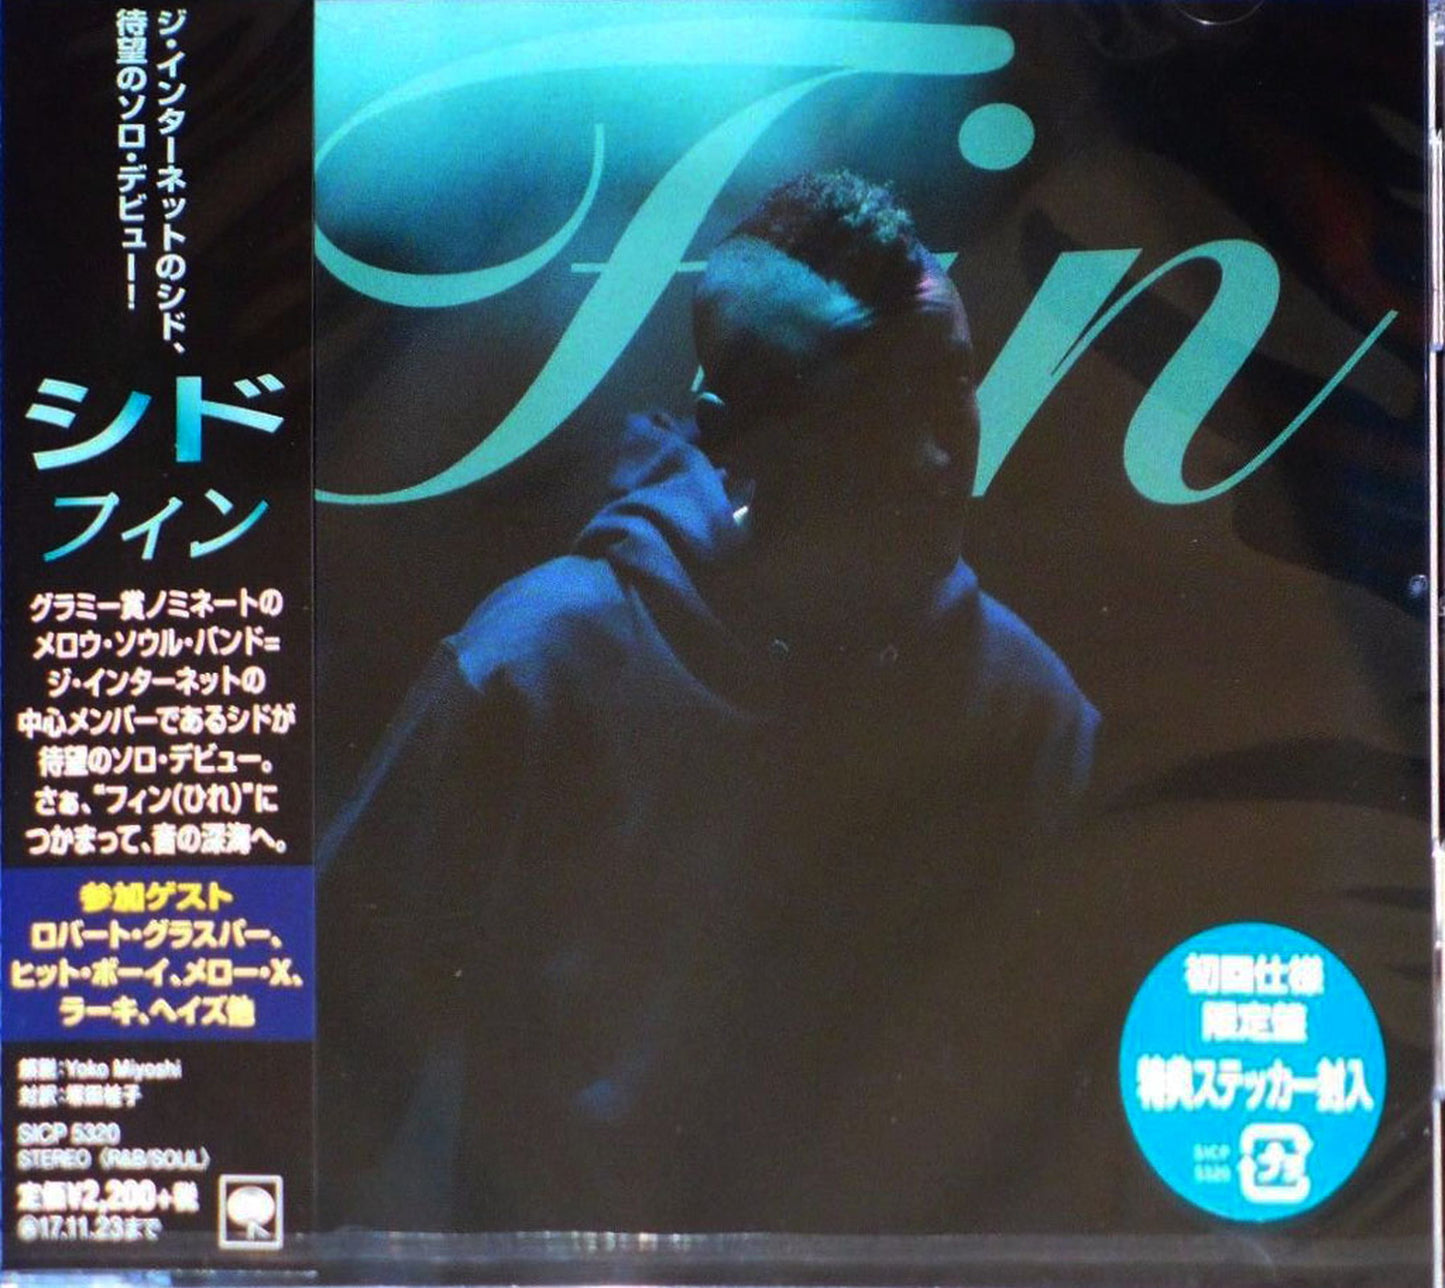 Syd - Fin - Japan CD